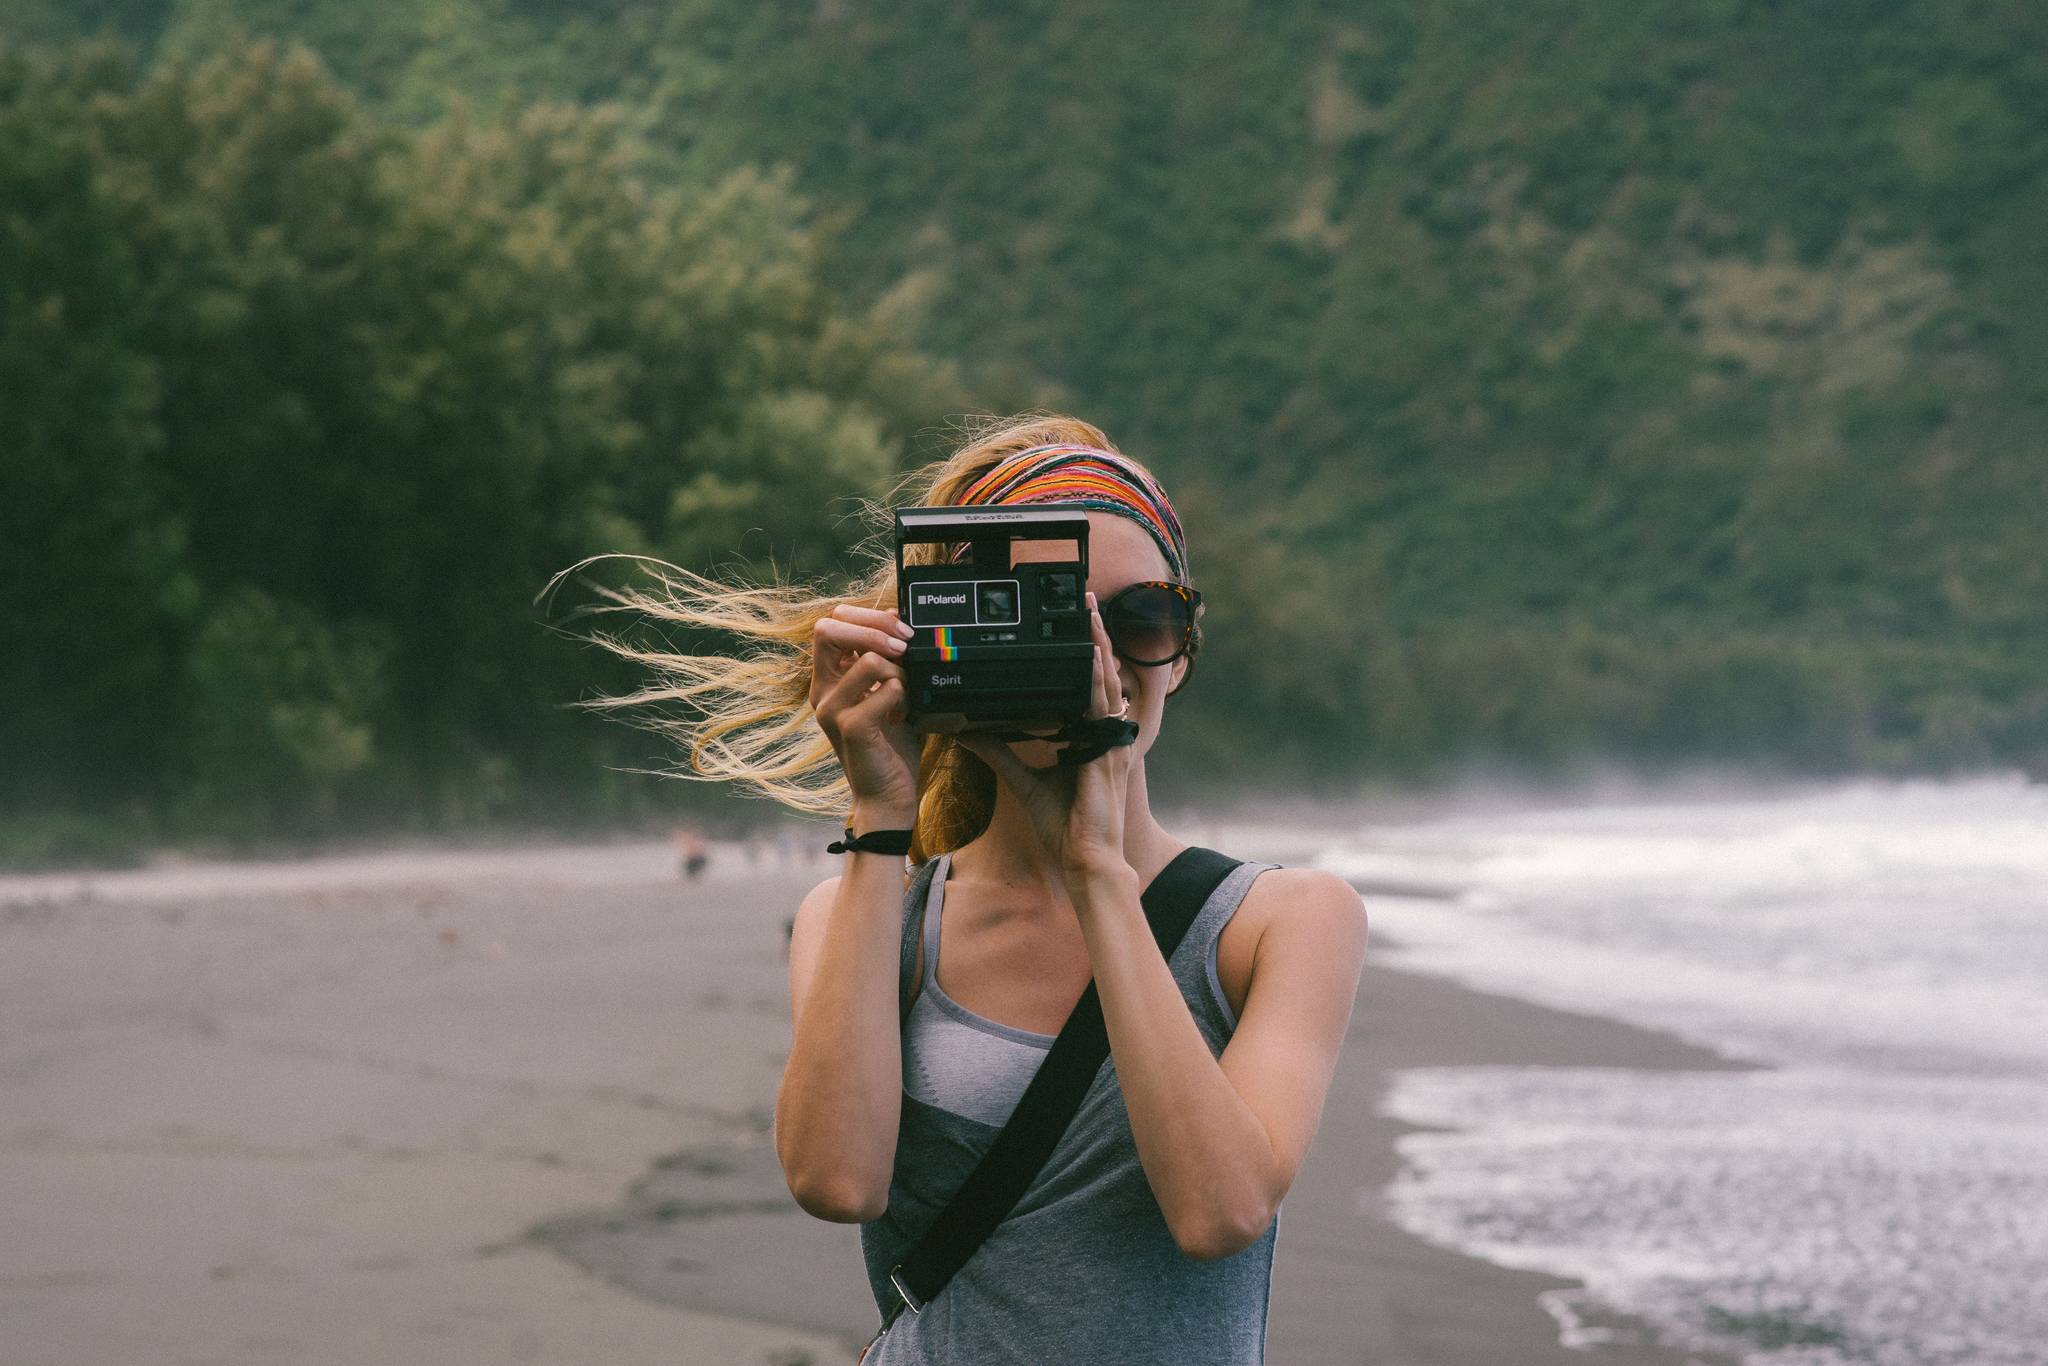 Polaroid: resurrecting film photography in a digital age